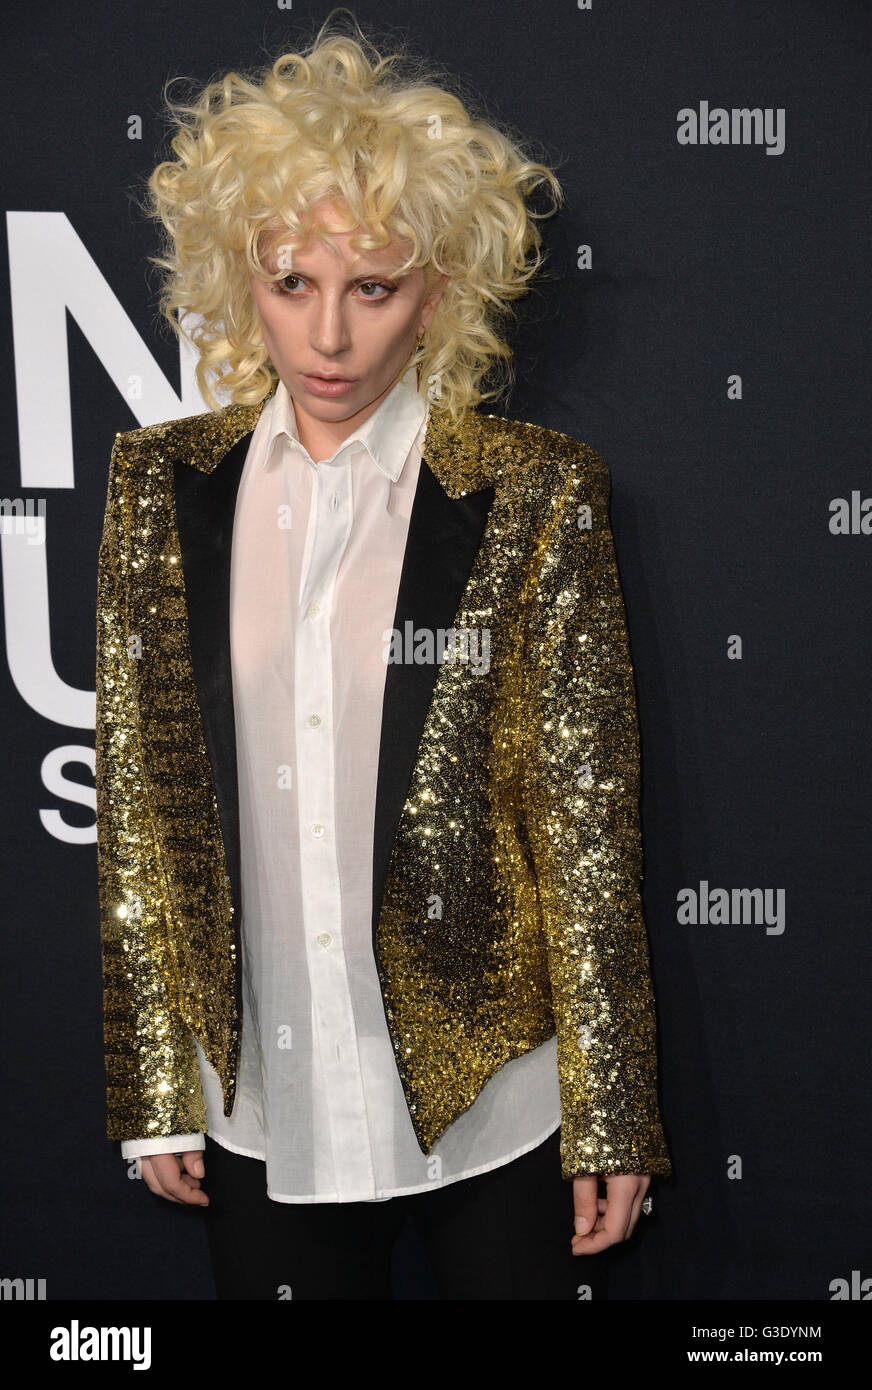 LOS ANGELES, CA - 10. Februar 2016: Sängerin Lady Gaga, Ankunft in Saint-Laurent bei der Palladium-Modenschau im Hollywood Palladium. Stockfoto